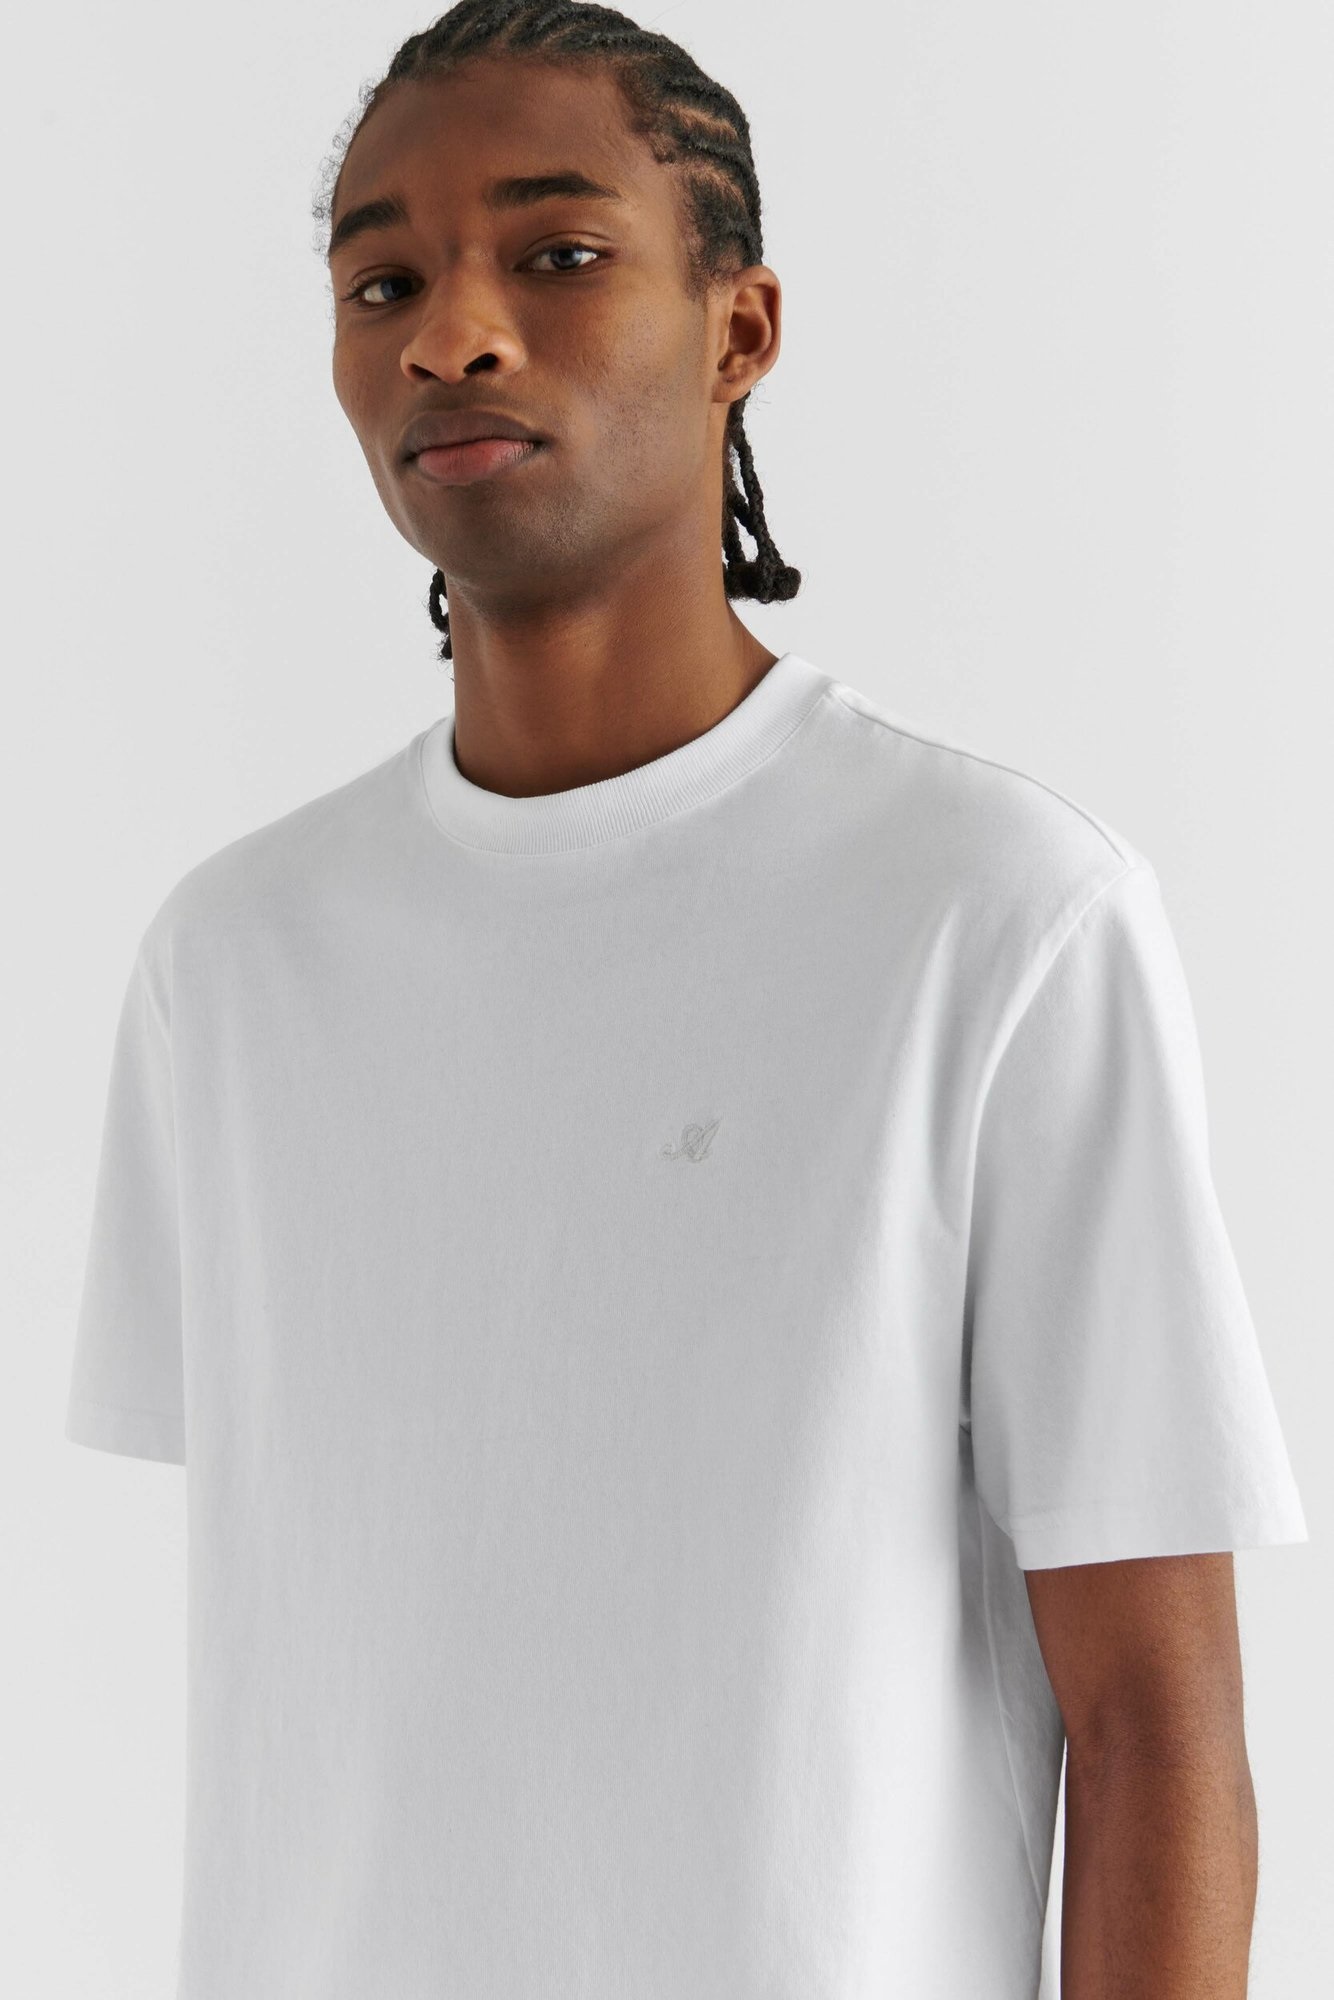 AXEL ARIGATO Signature T-Shirt in White M